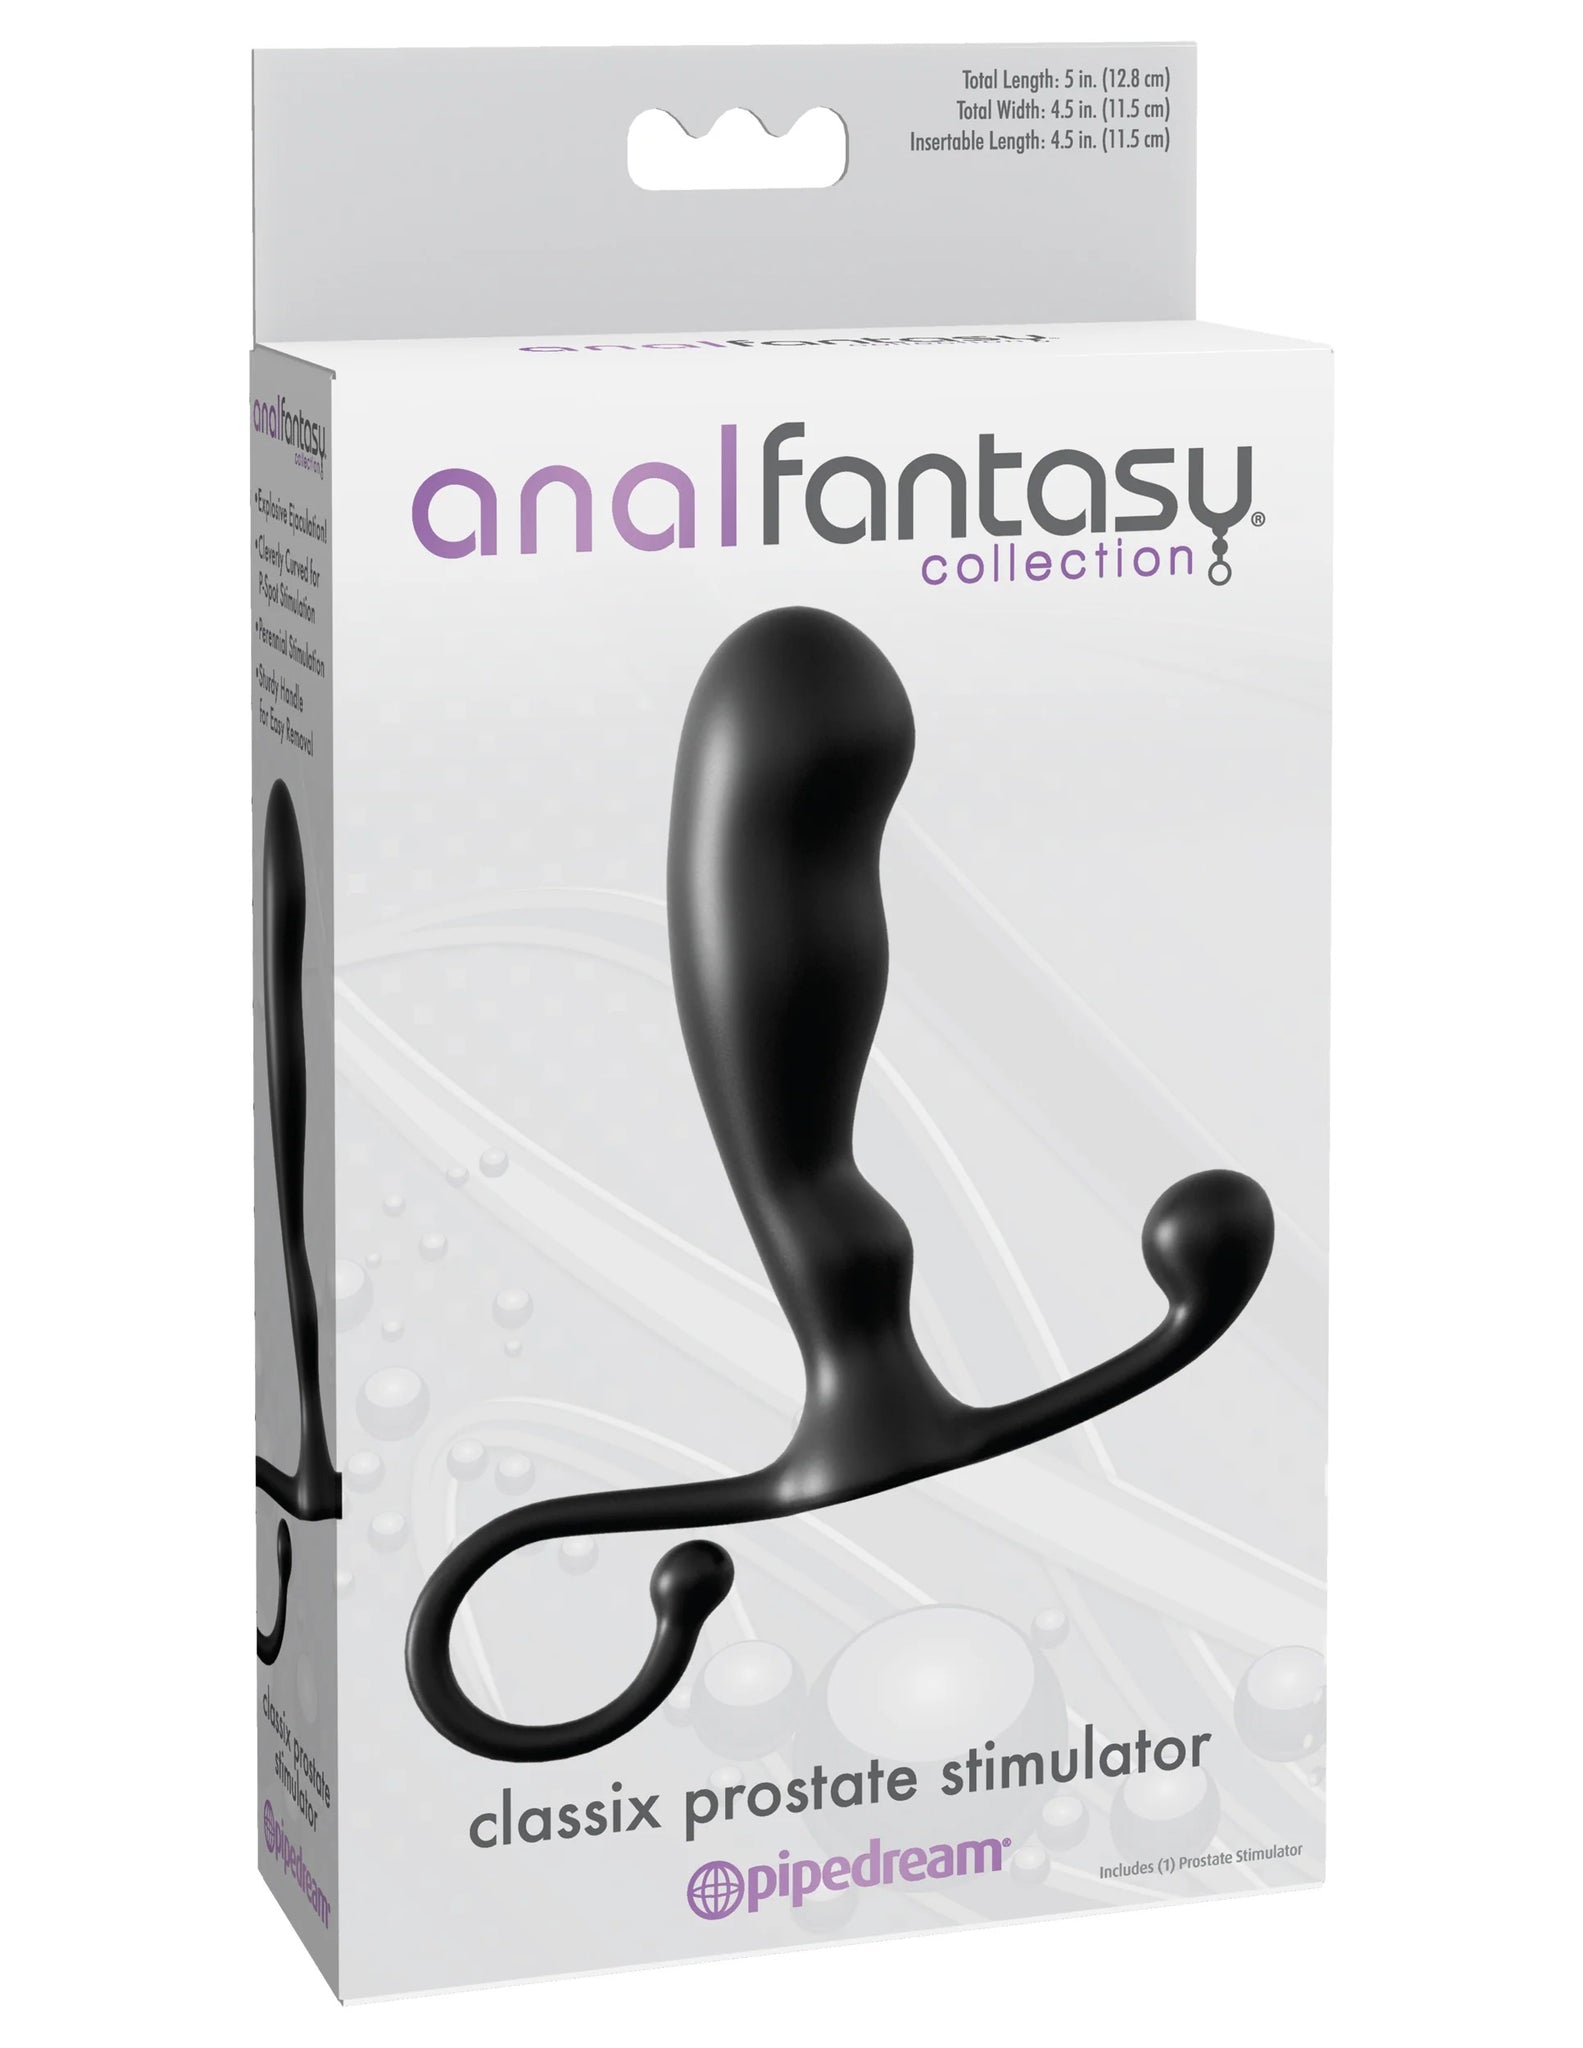 Anal Fantasy Collection Classix Prostate  Stimulator - Black